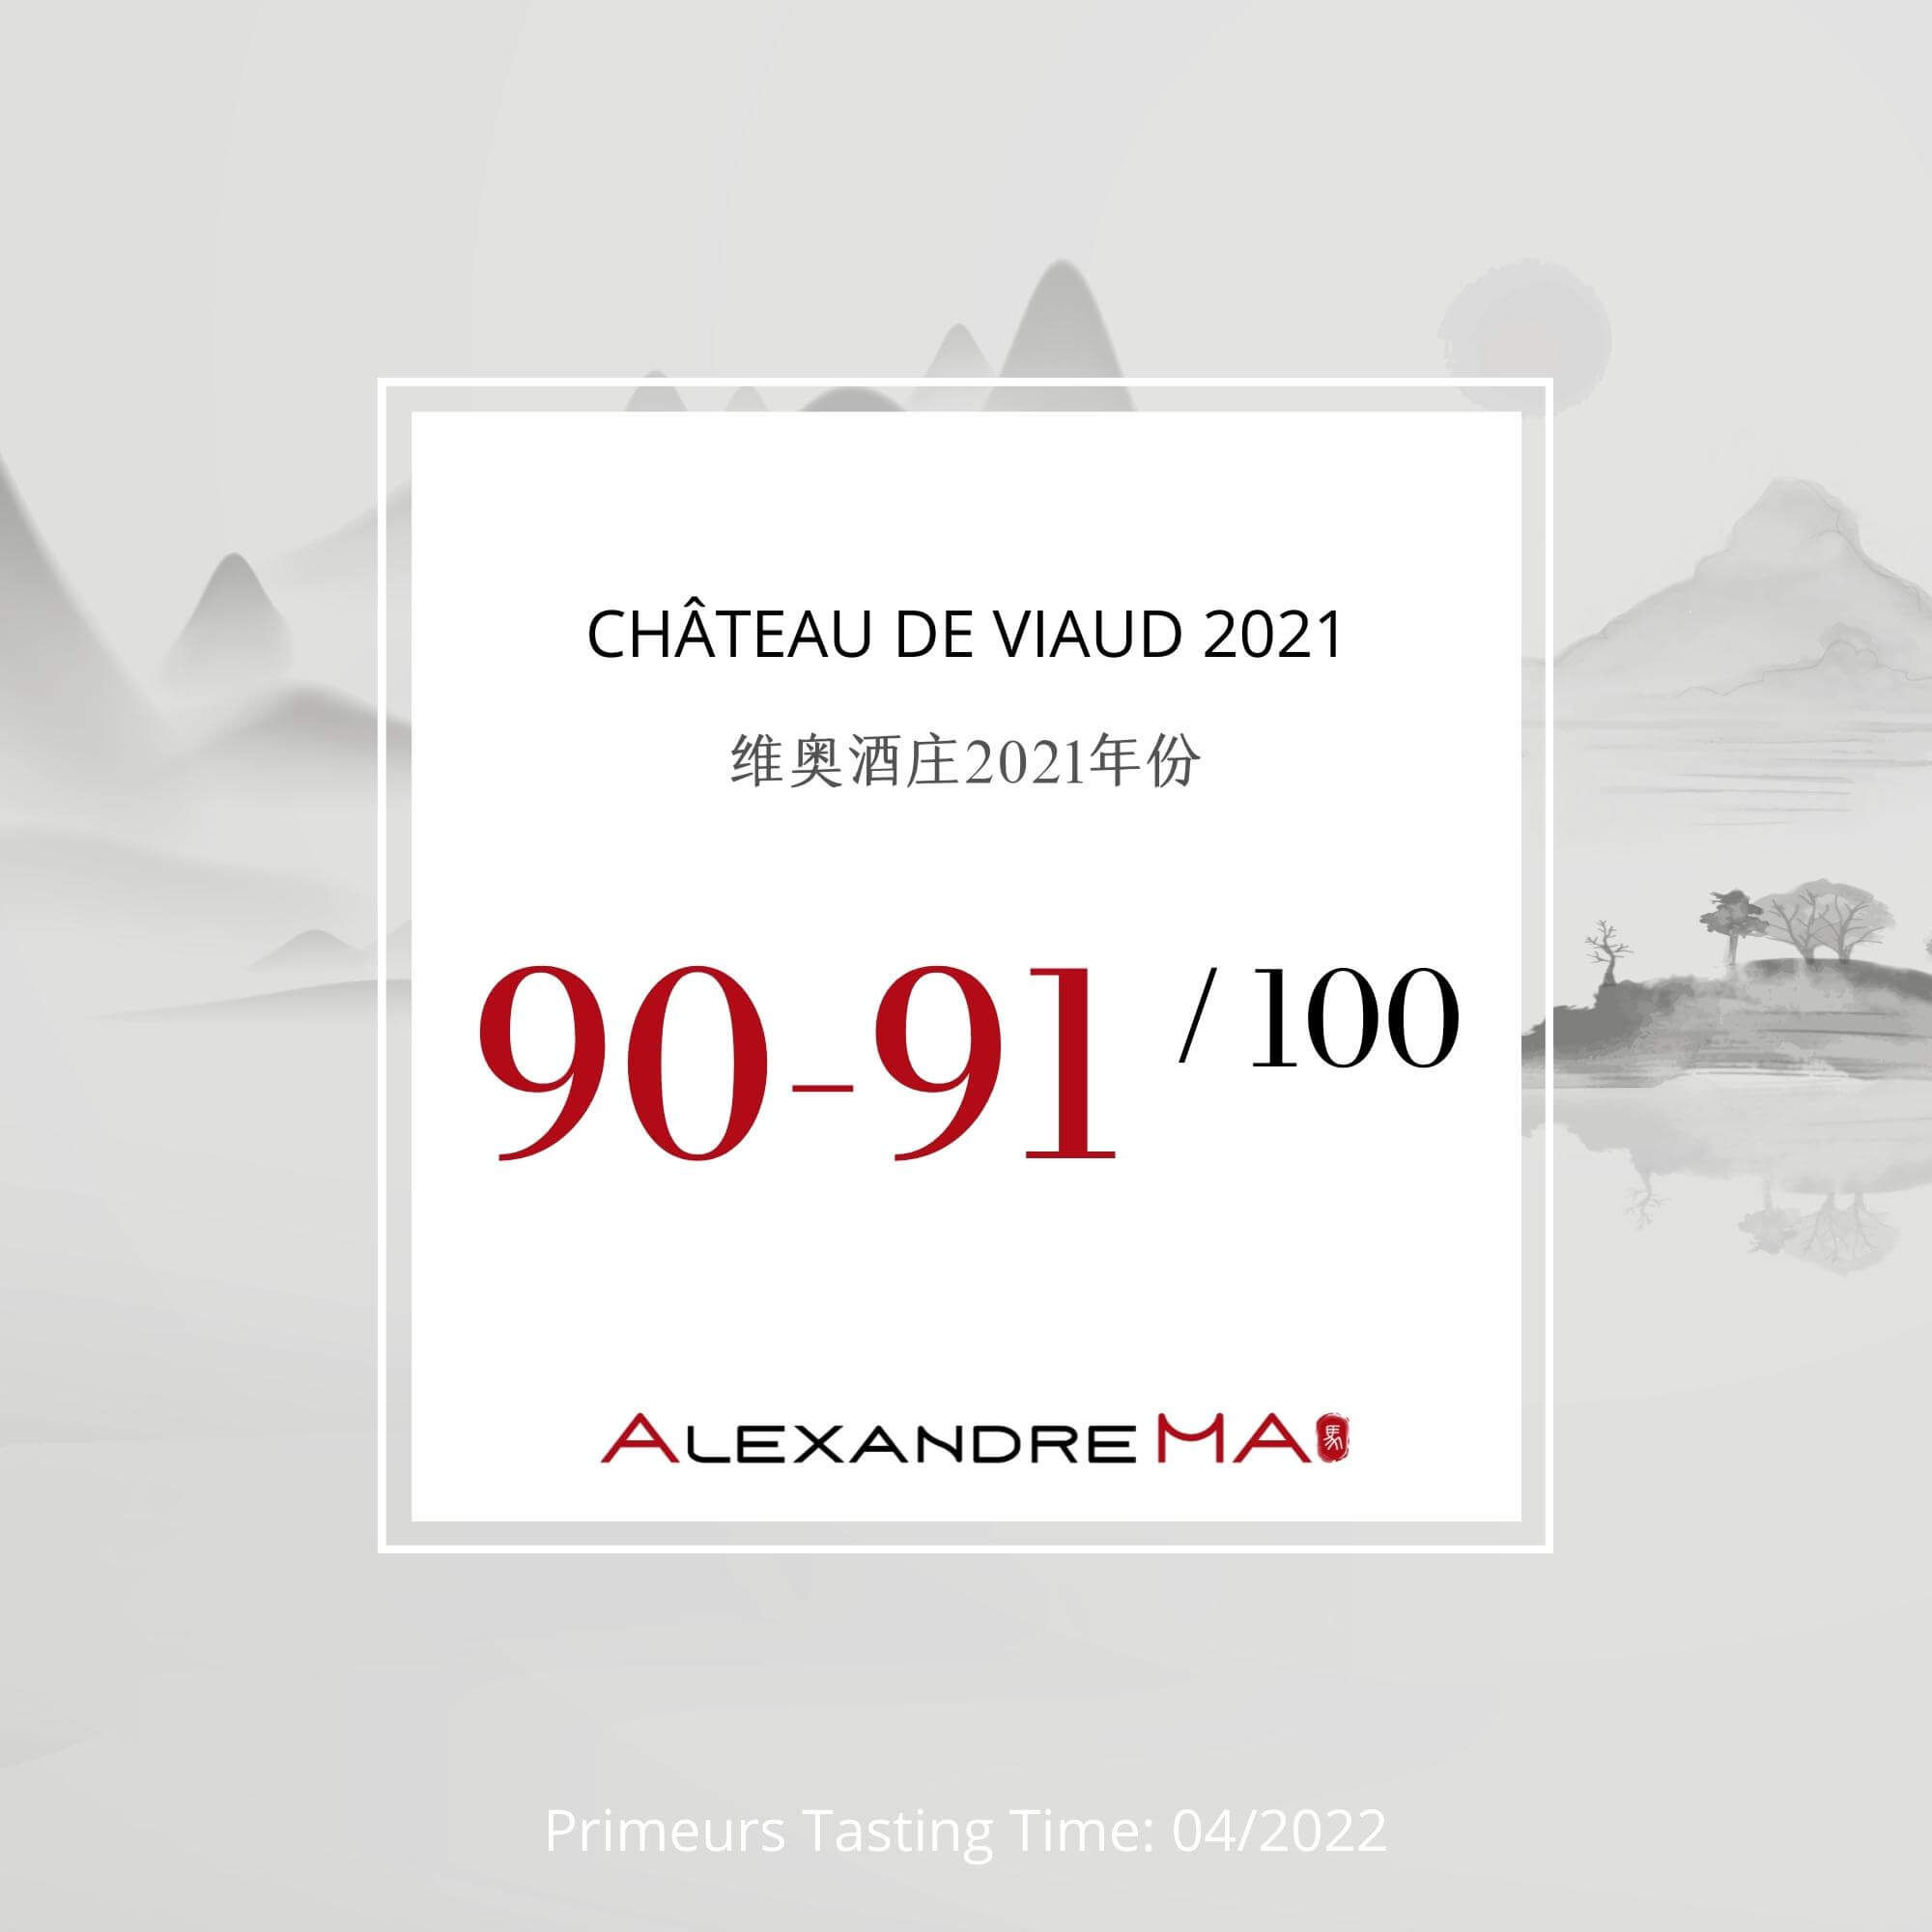 Château de Viaud 2021 - Alexandre MA